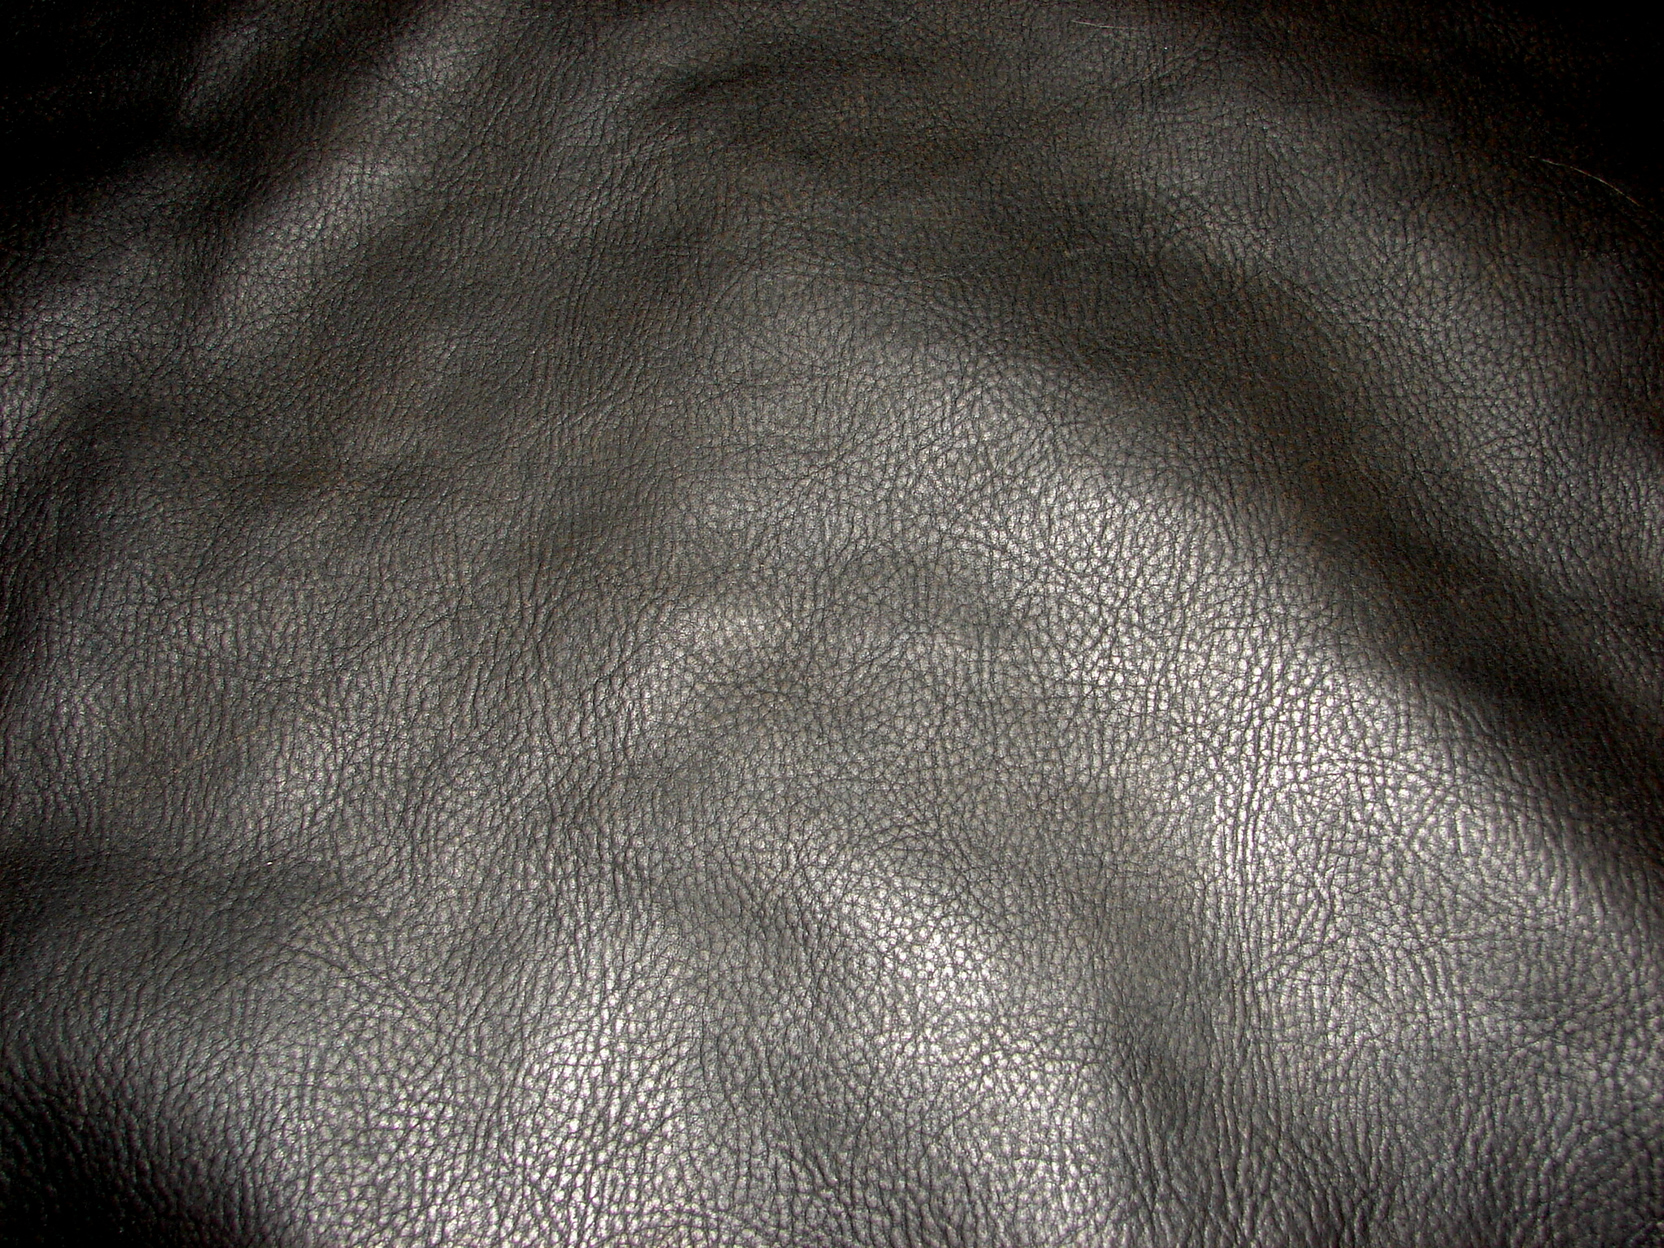 кожа текстура, фон, leather background, кожанный фон